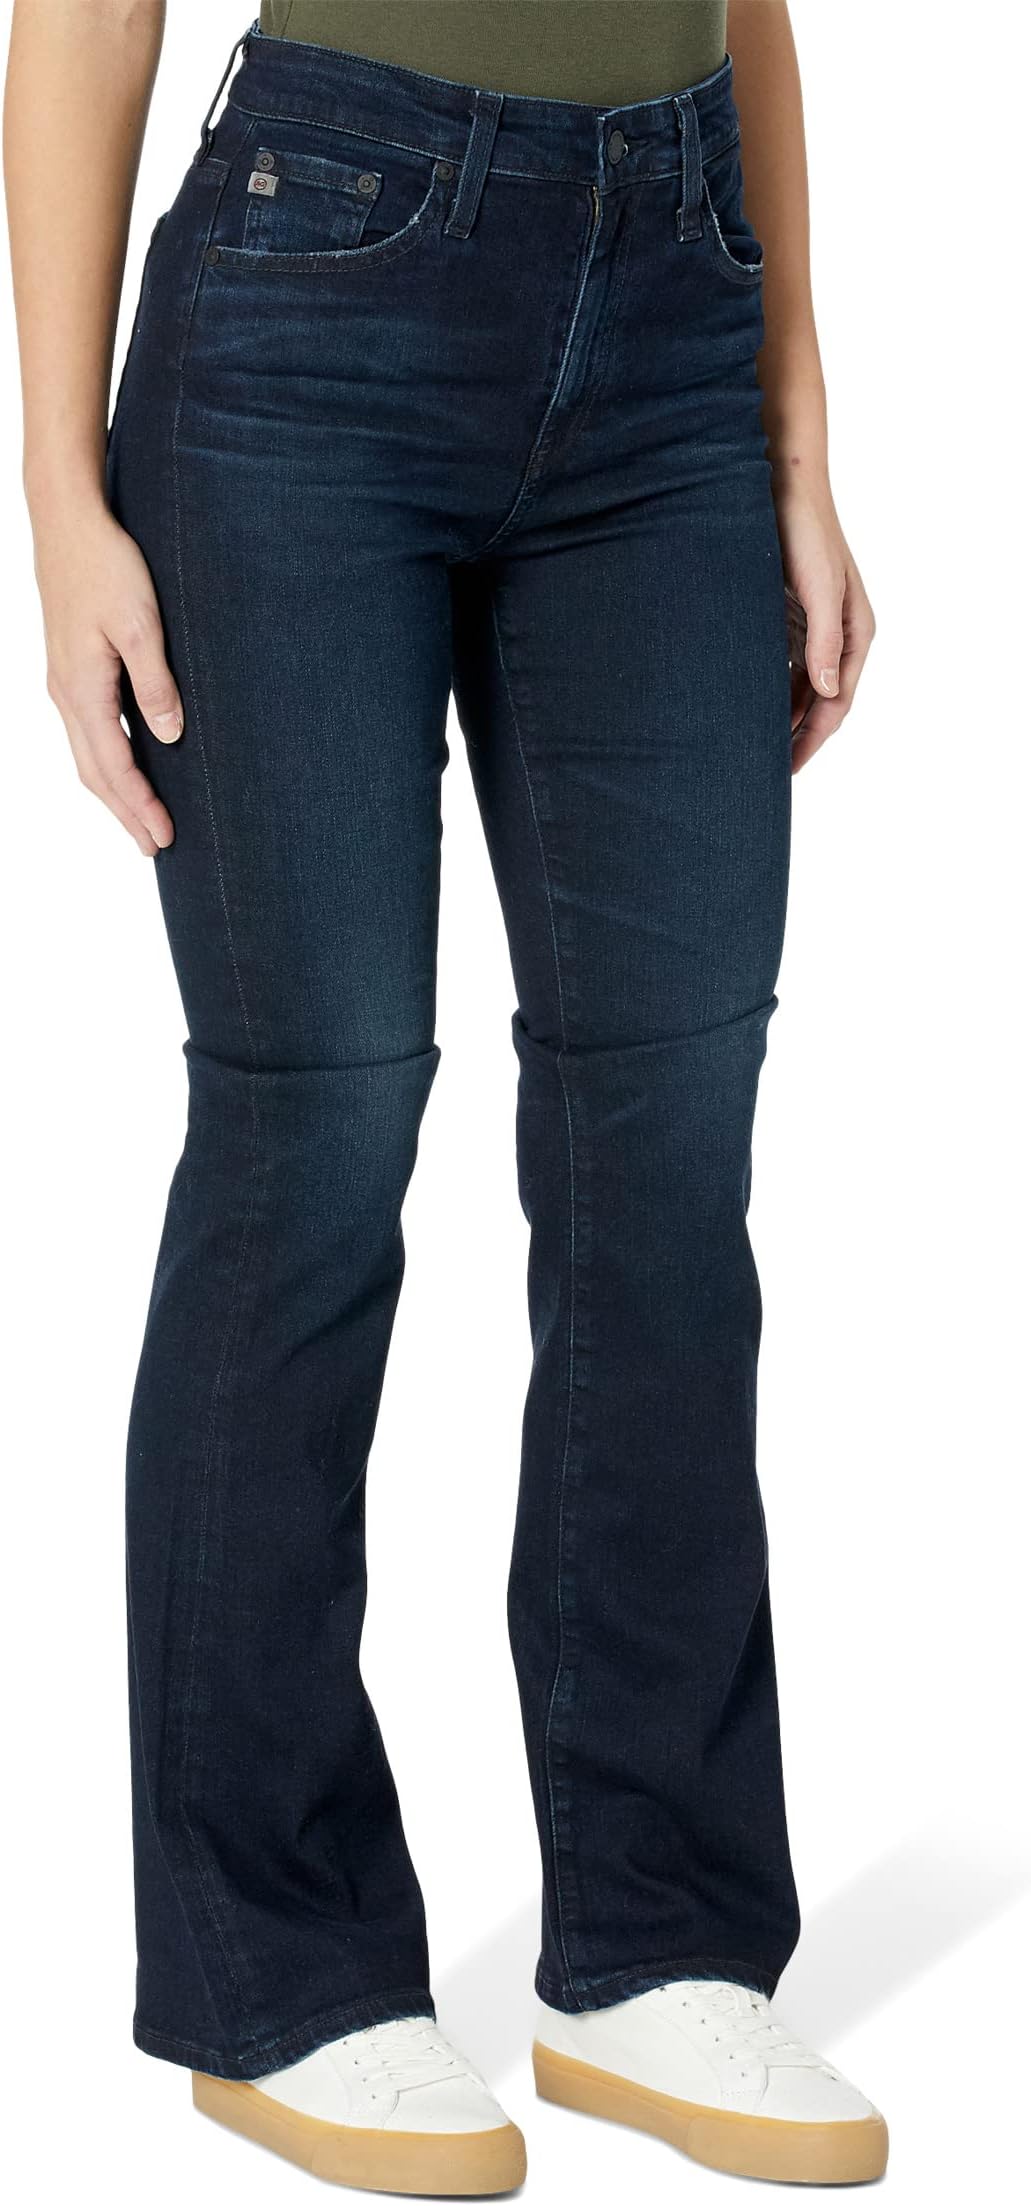 Джинсы Farrah Boot in 3 Years Rockwell AG Jeans, цвет 3 Years Rockwell marling karal ann norman rockwell